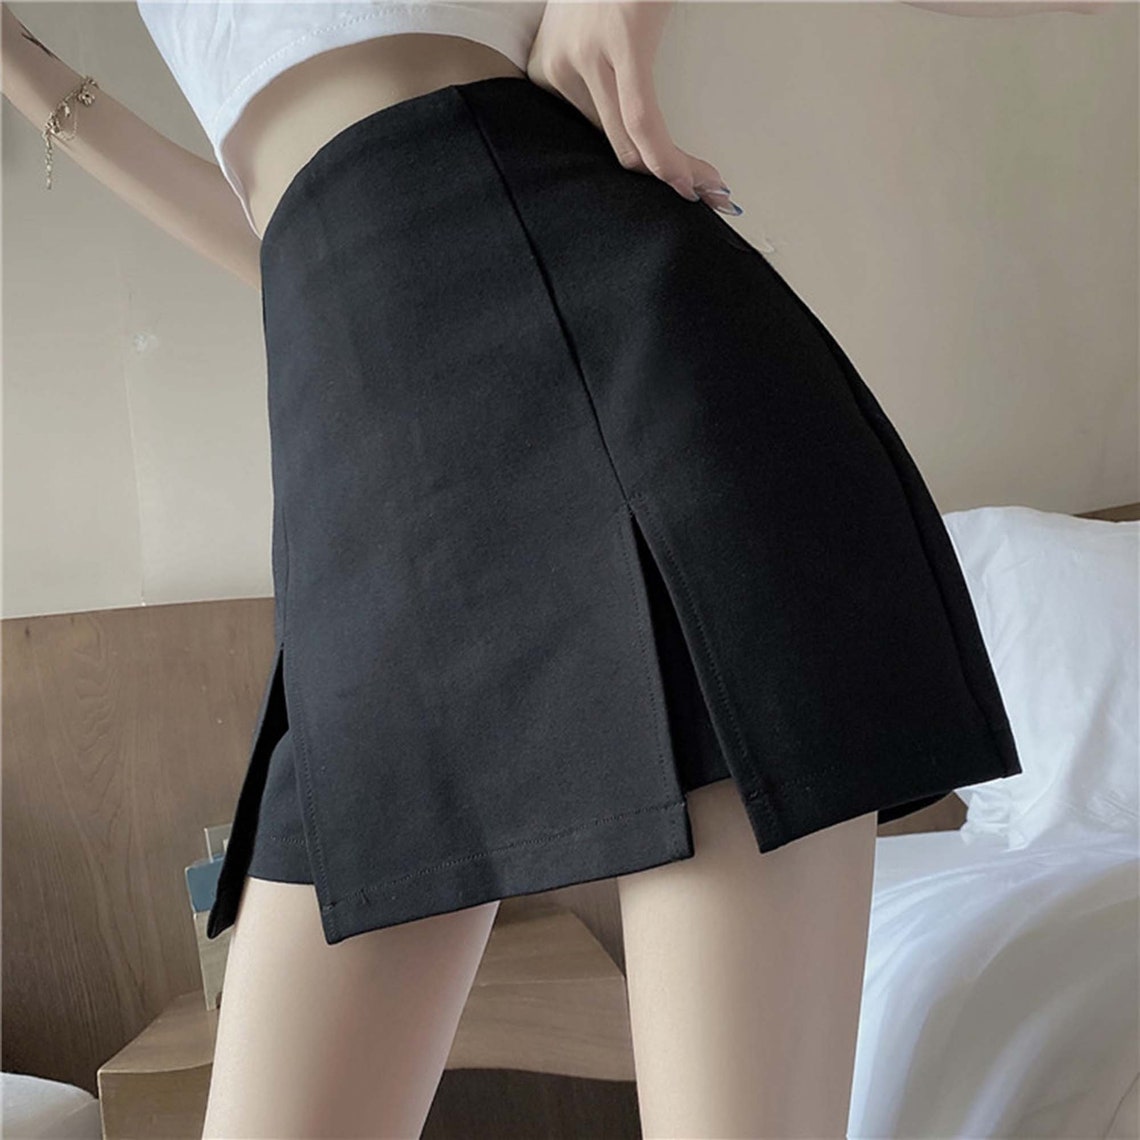 Double Sides Slit High Waisted Black Mini Skirt